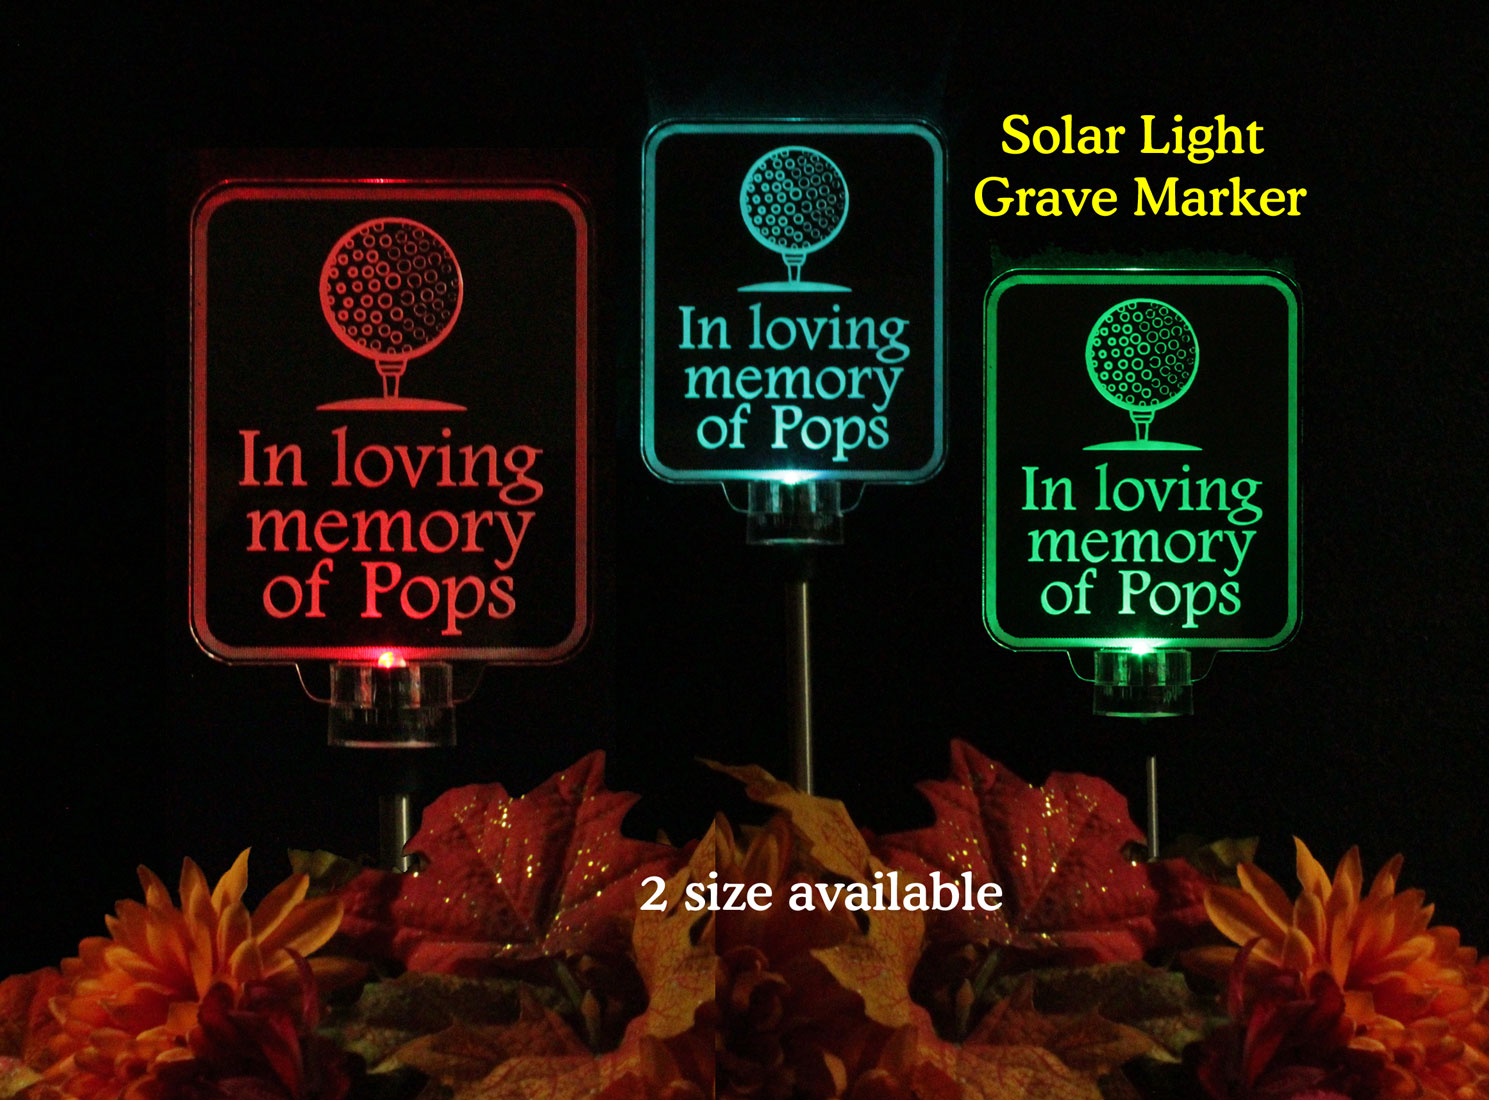 Golf Ball Cemetary marker, solar light grave marker, personalized